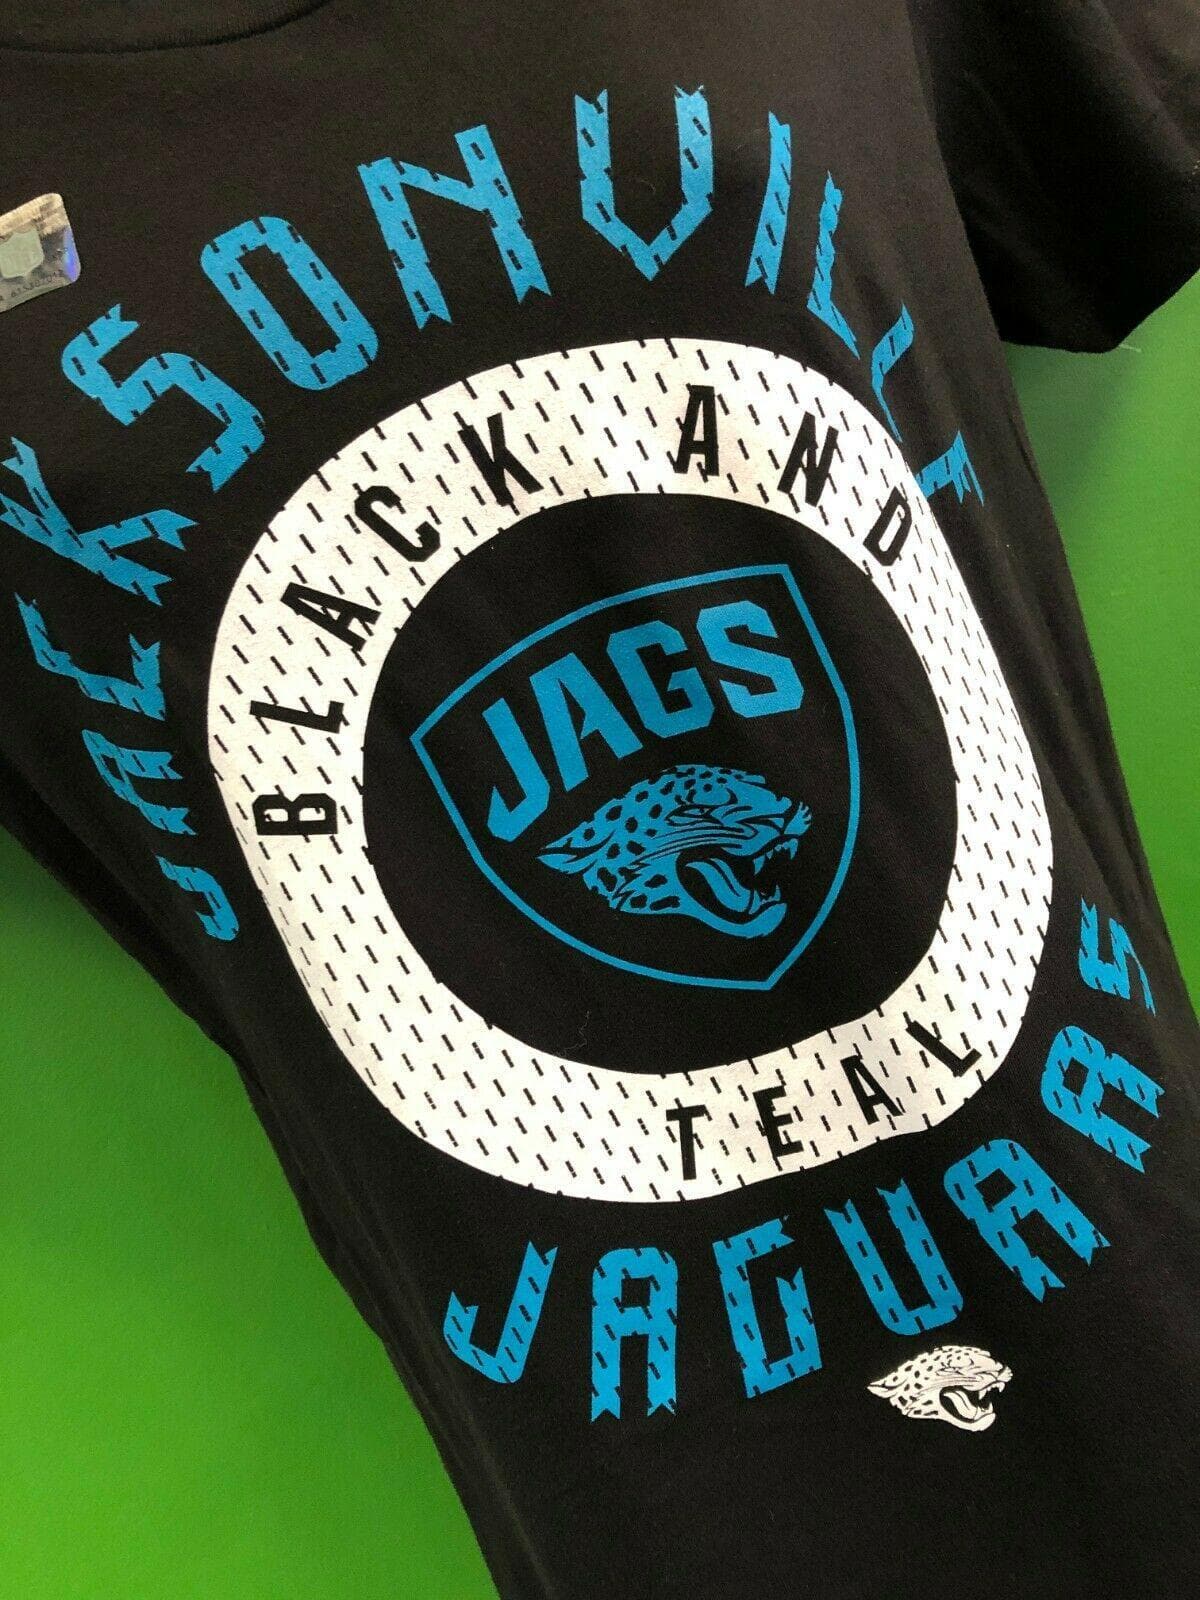 NFL Jacksonville Jaguars Majestic Beautiful T-Shirt Women's XL NWOT